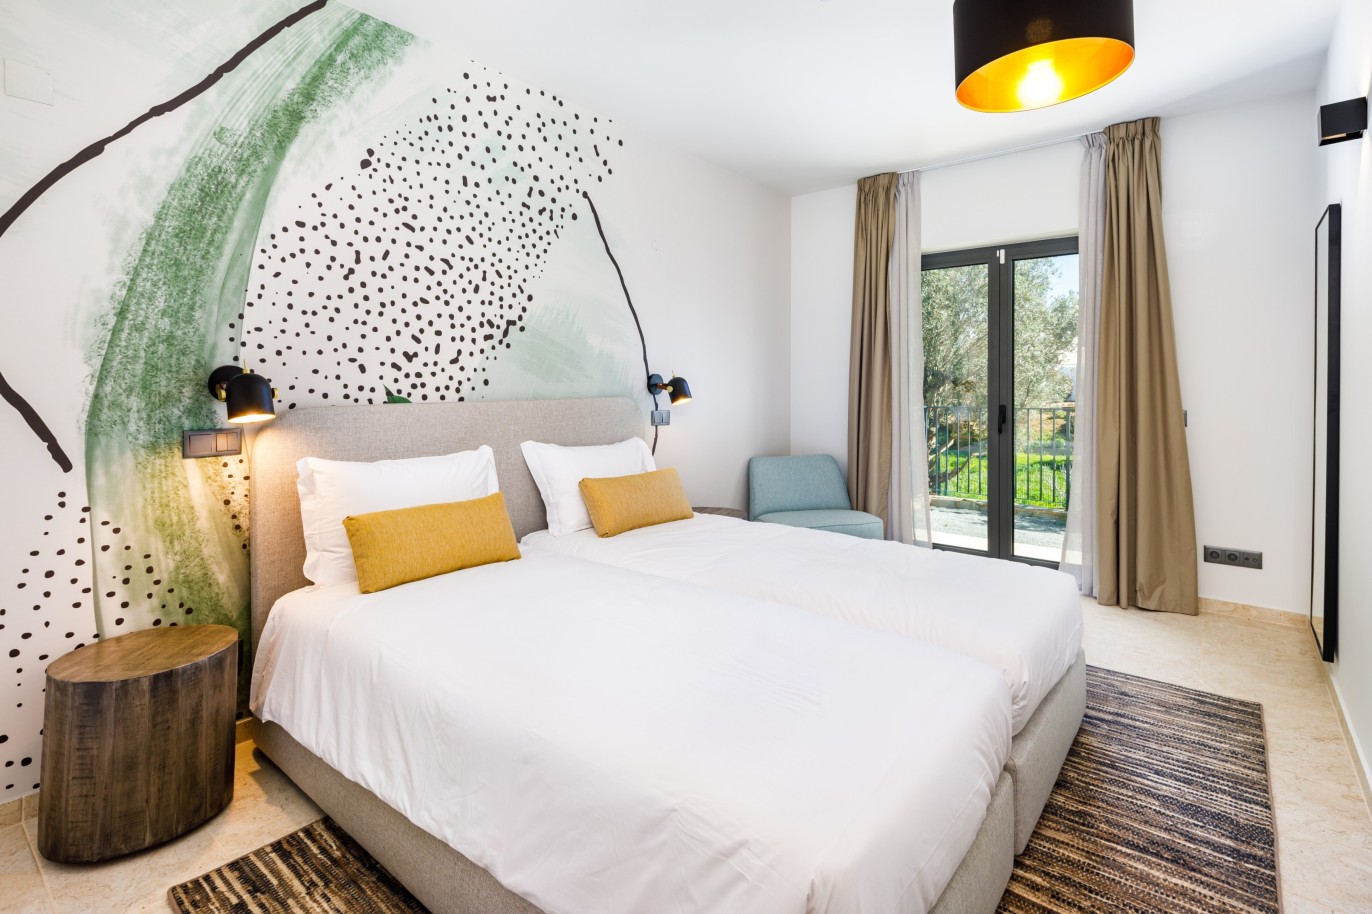 5 Bedroom Villa in luxury condominium with private pool, Carvoeiro, Algarve_259452